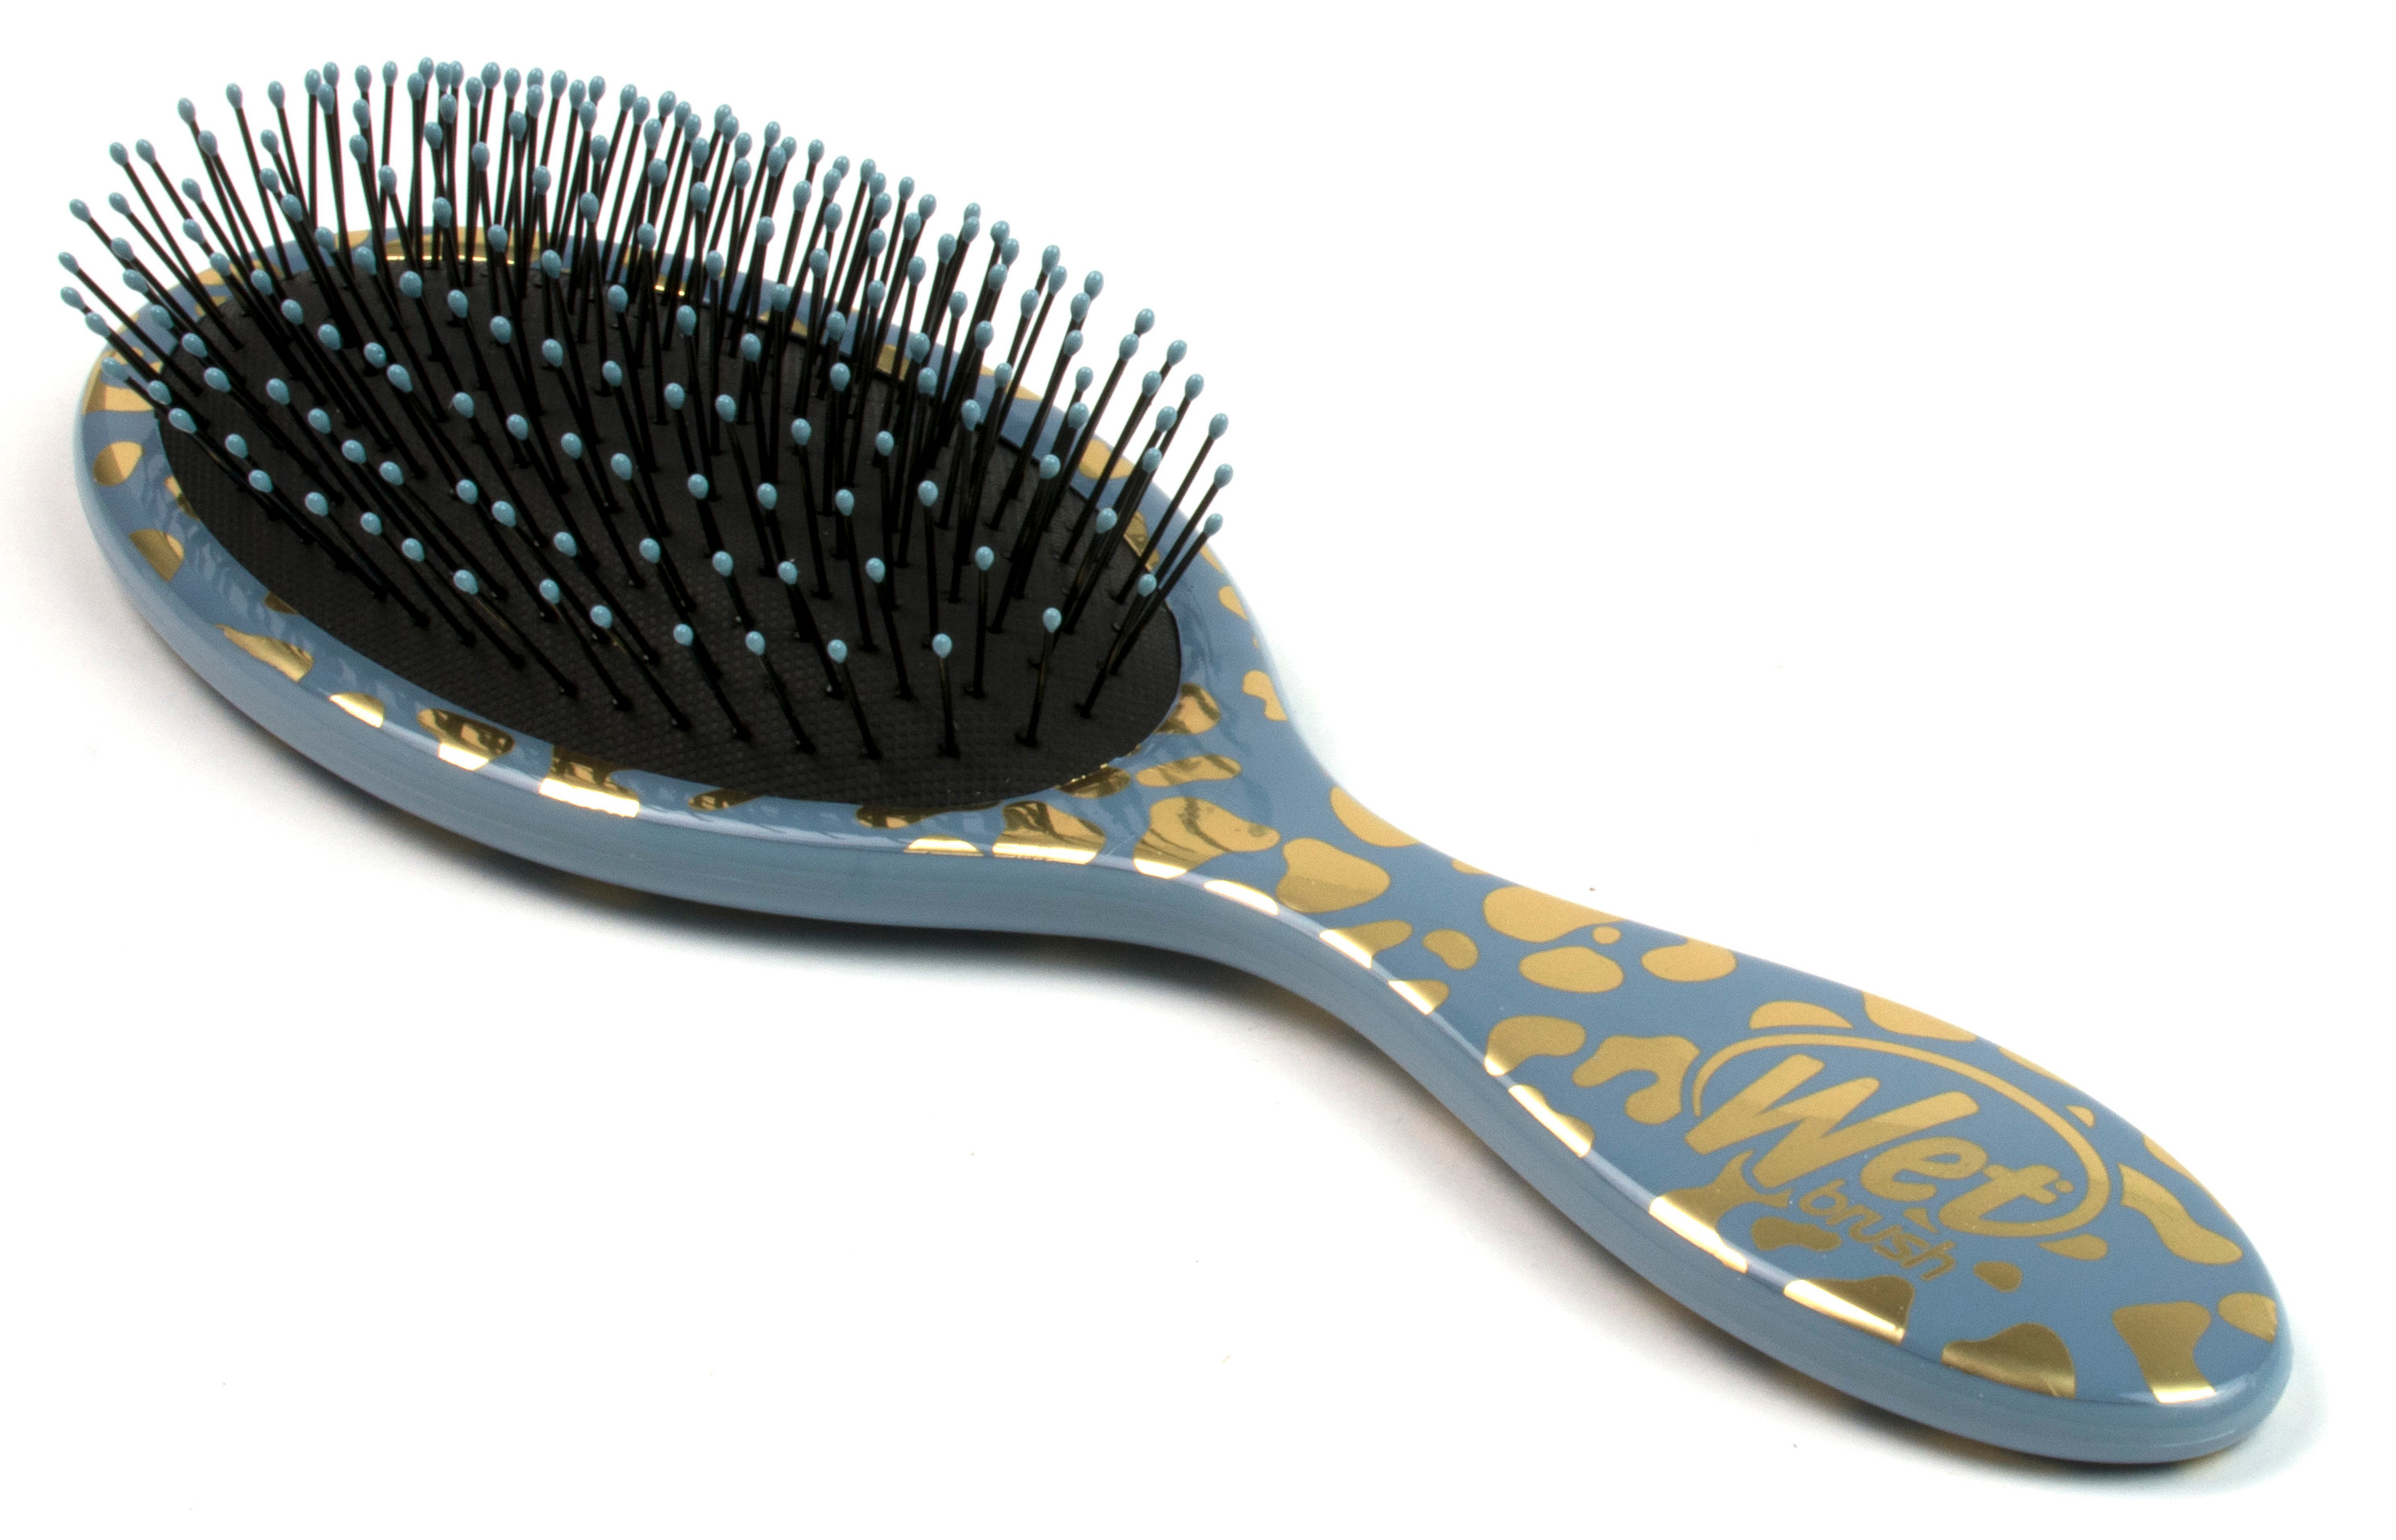 Wet Brush Щетка для спутанных волос Сафари, леопард / WET BR